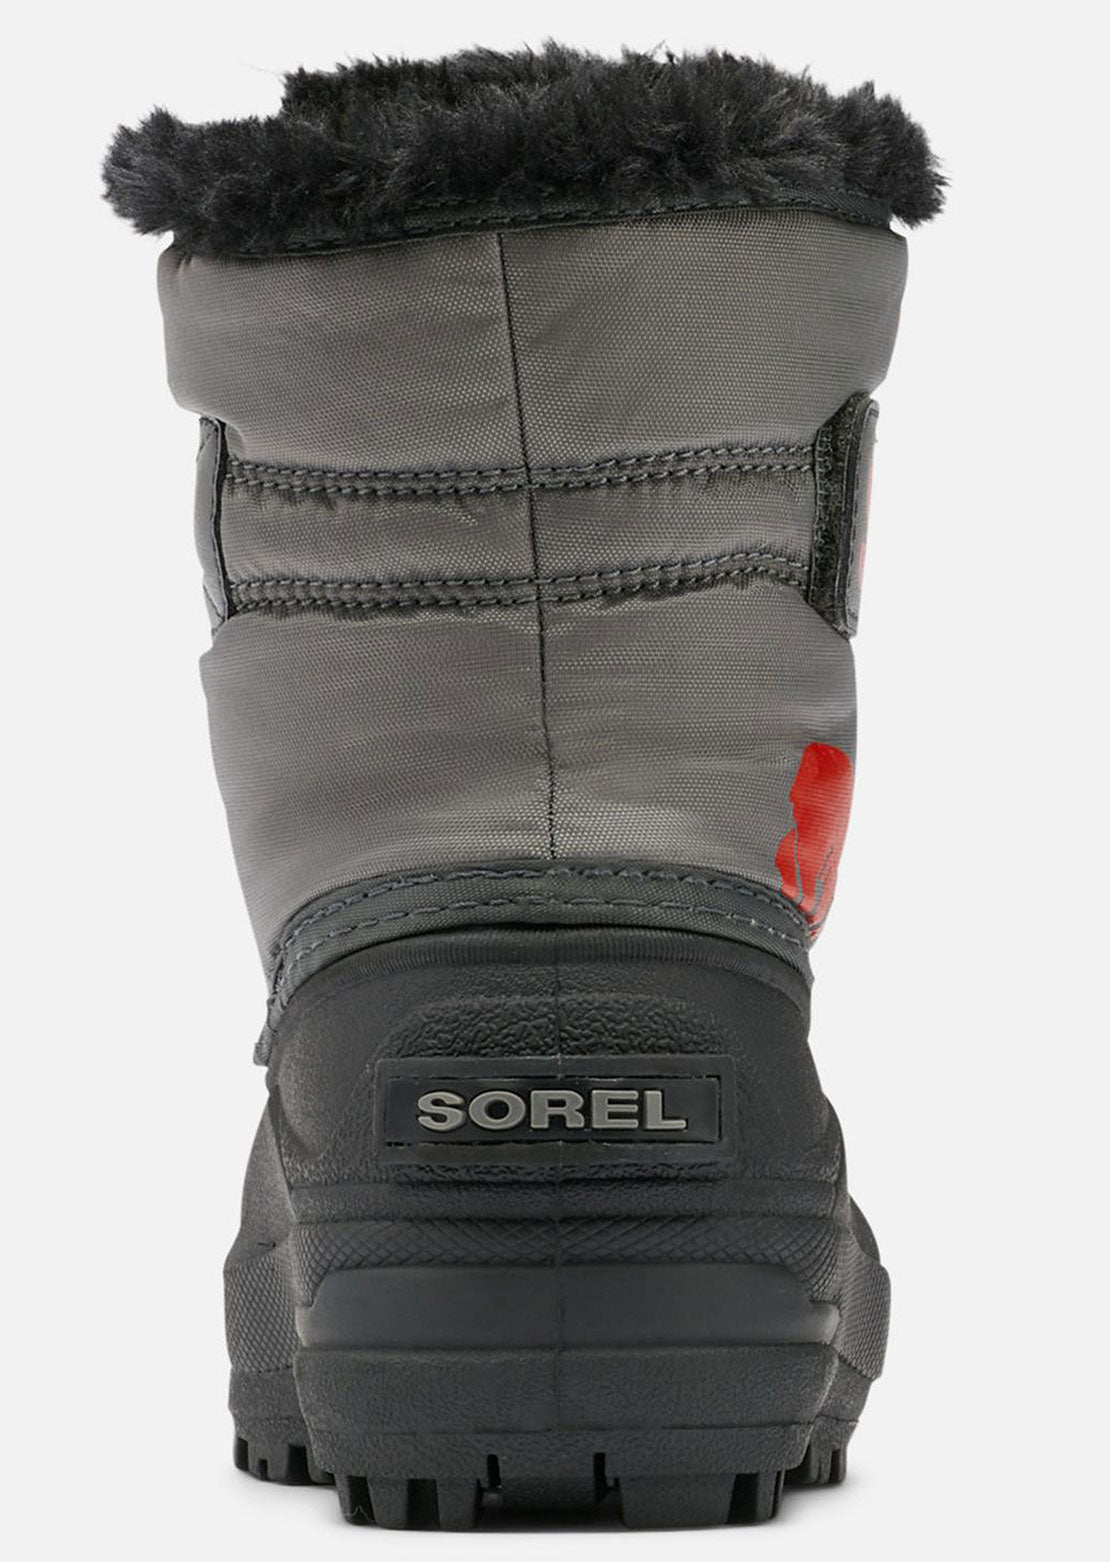 Sorel Infant Snow Commander Boots Quarry/Cherrybomb